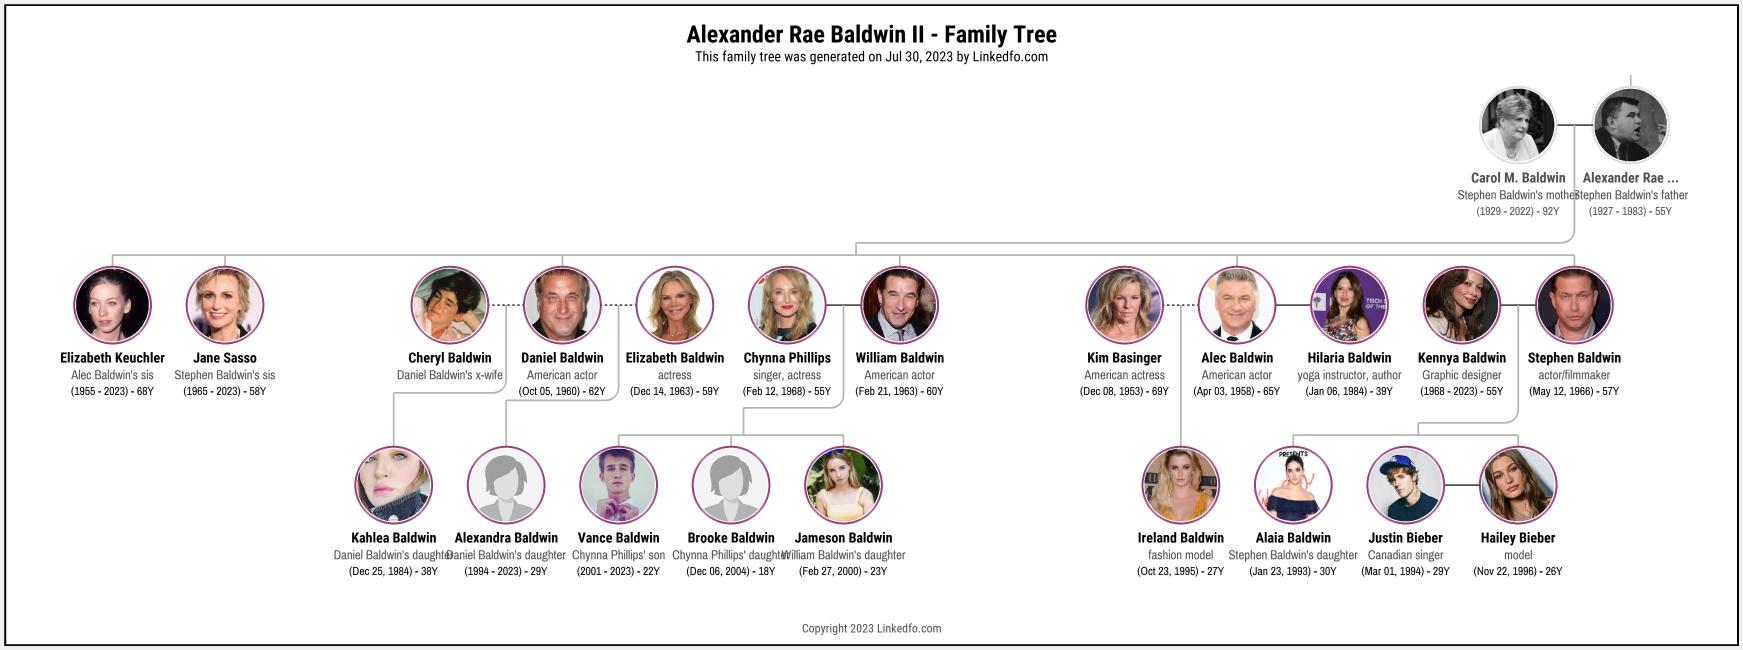 Alexander Rae Baldwin II's Family Tree